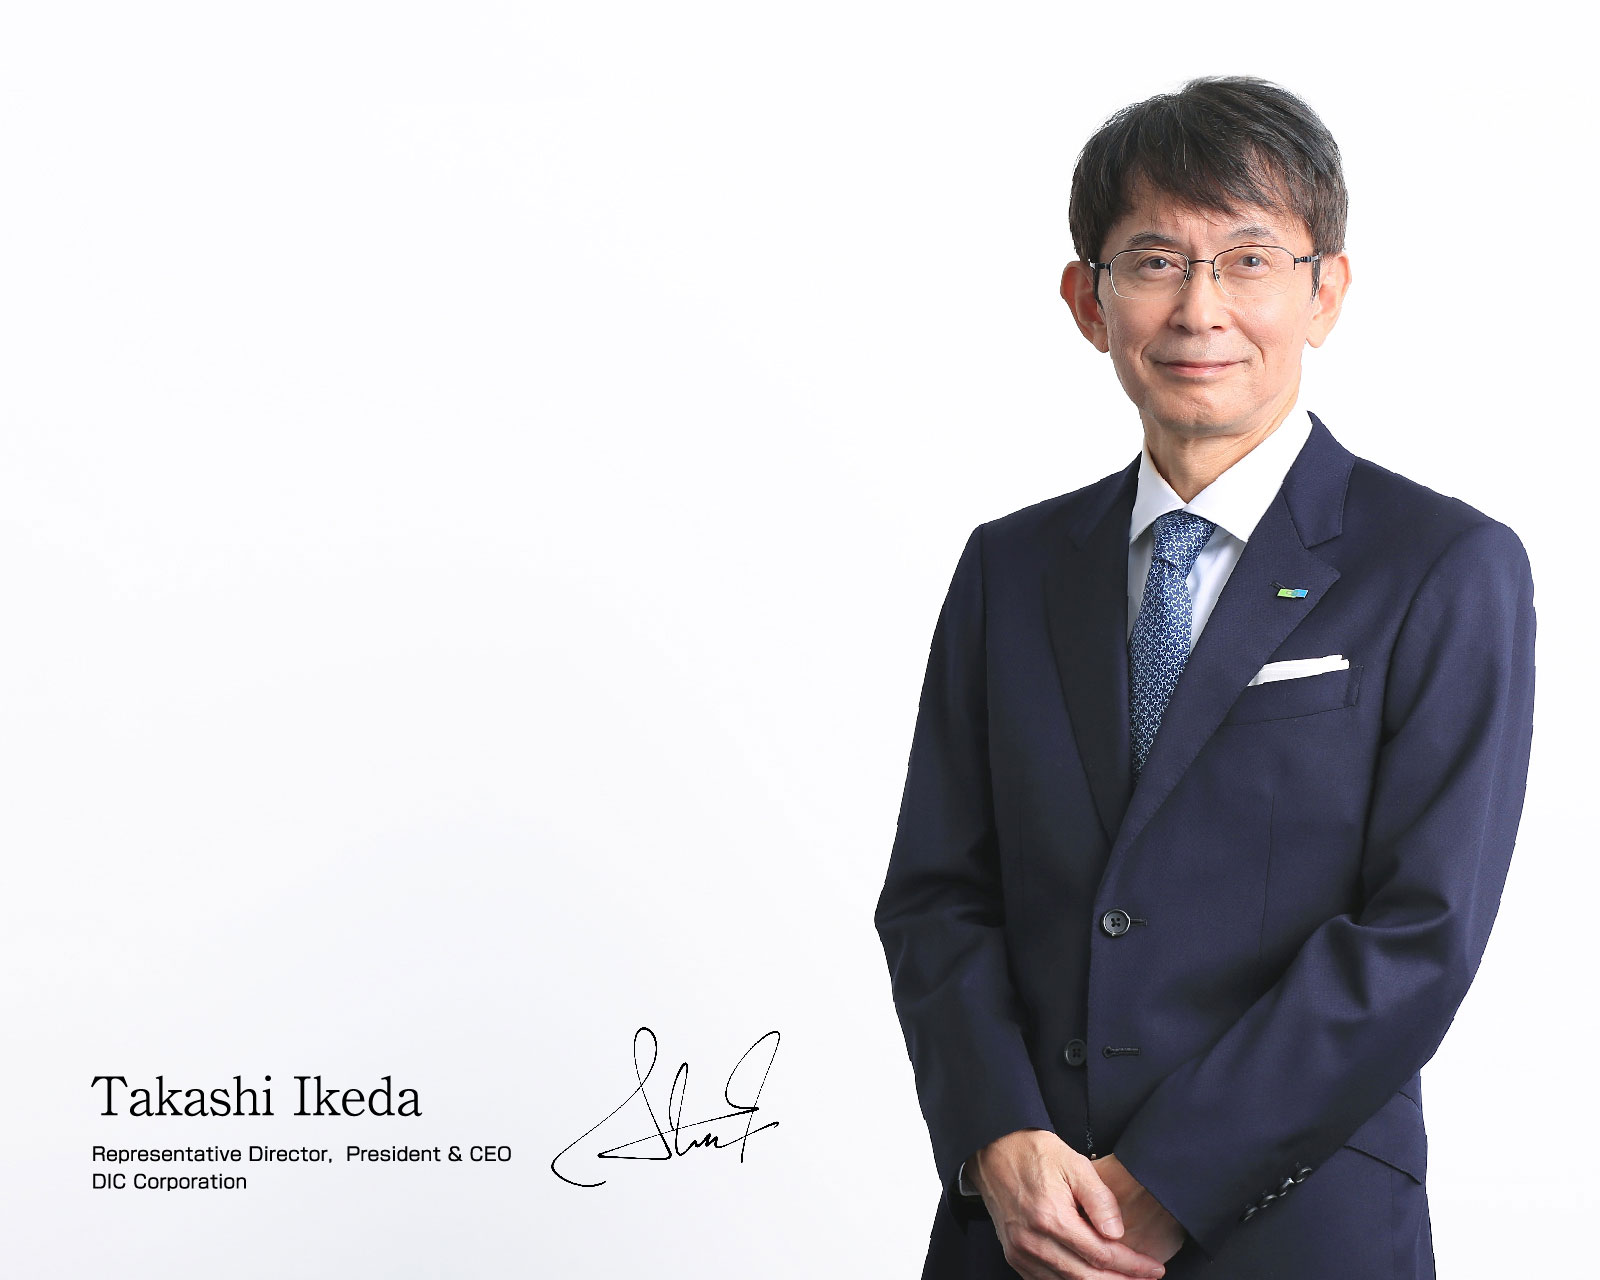 Takashi Ikeda, Representative Director, President & CEO